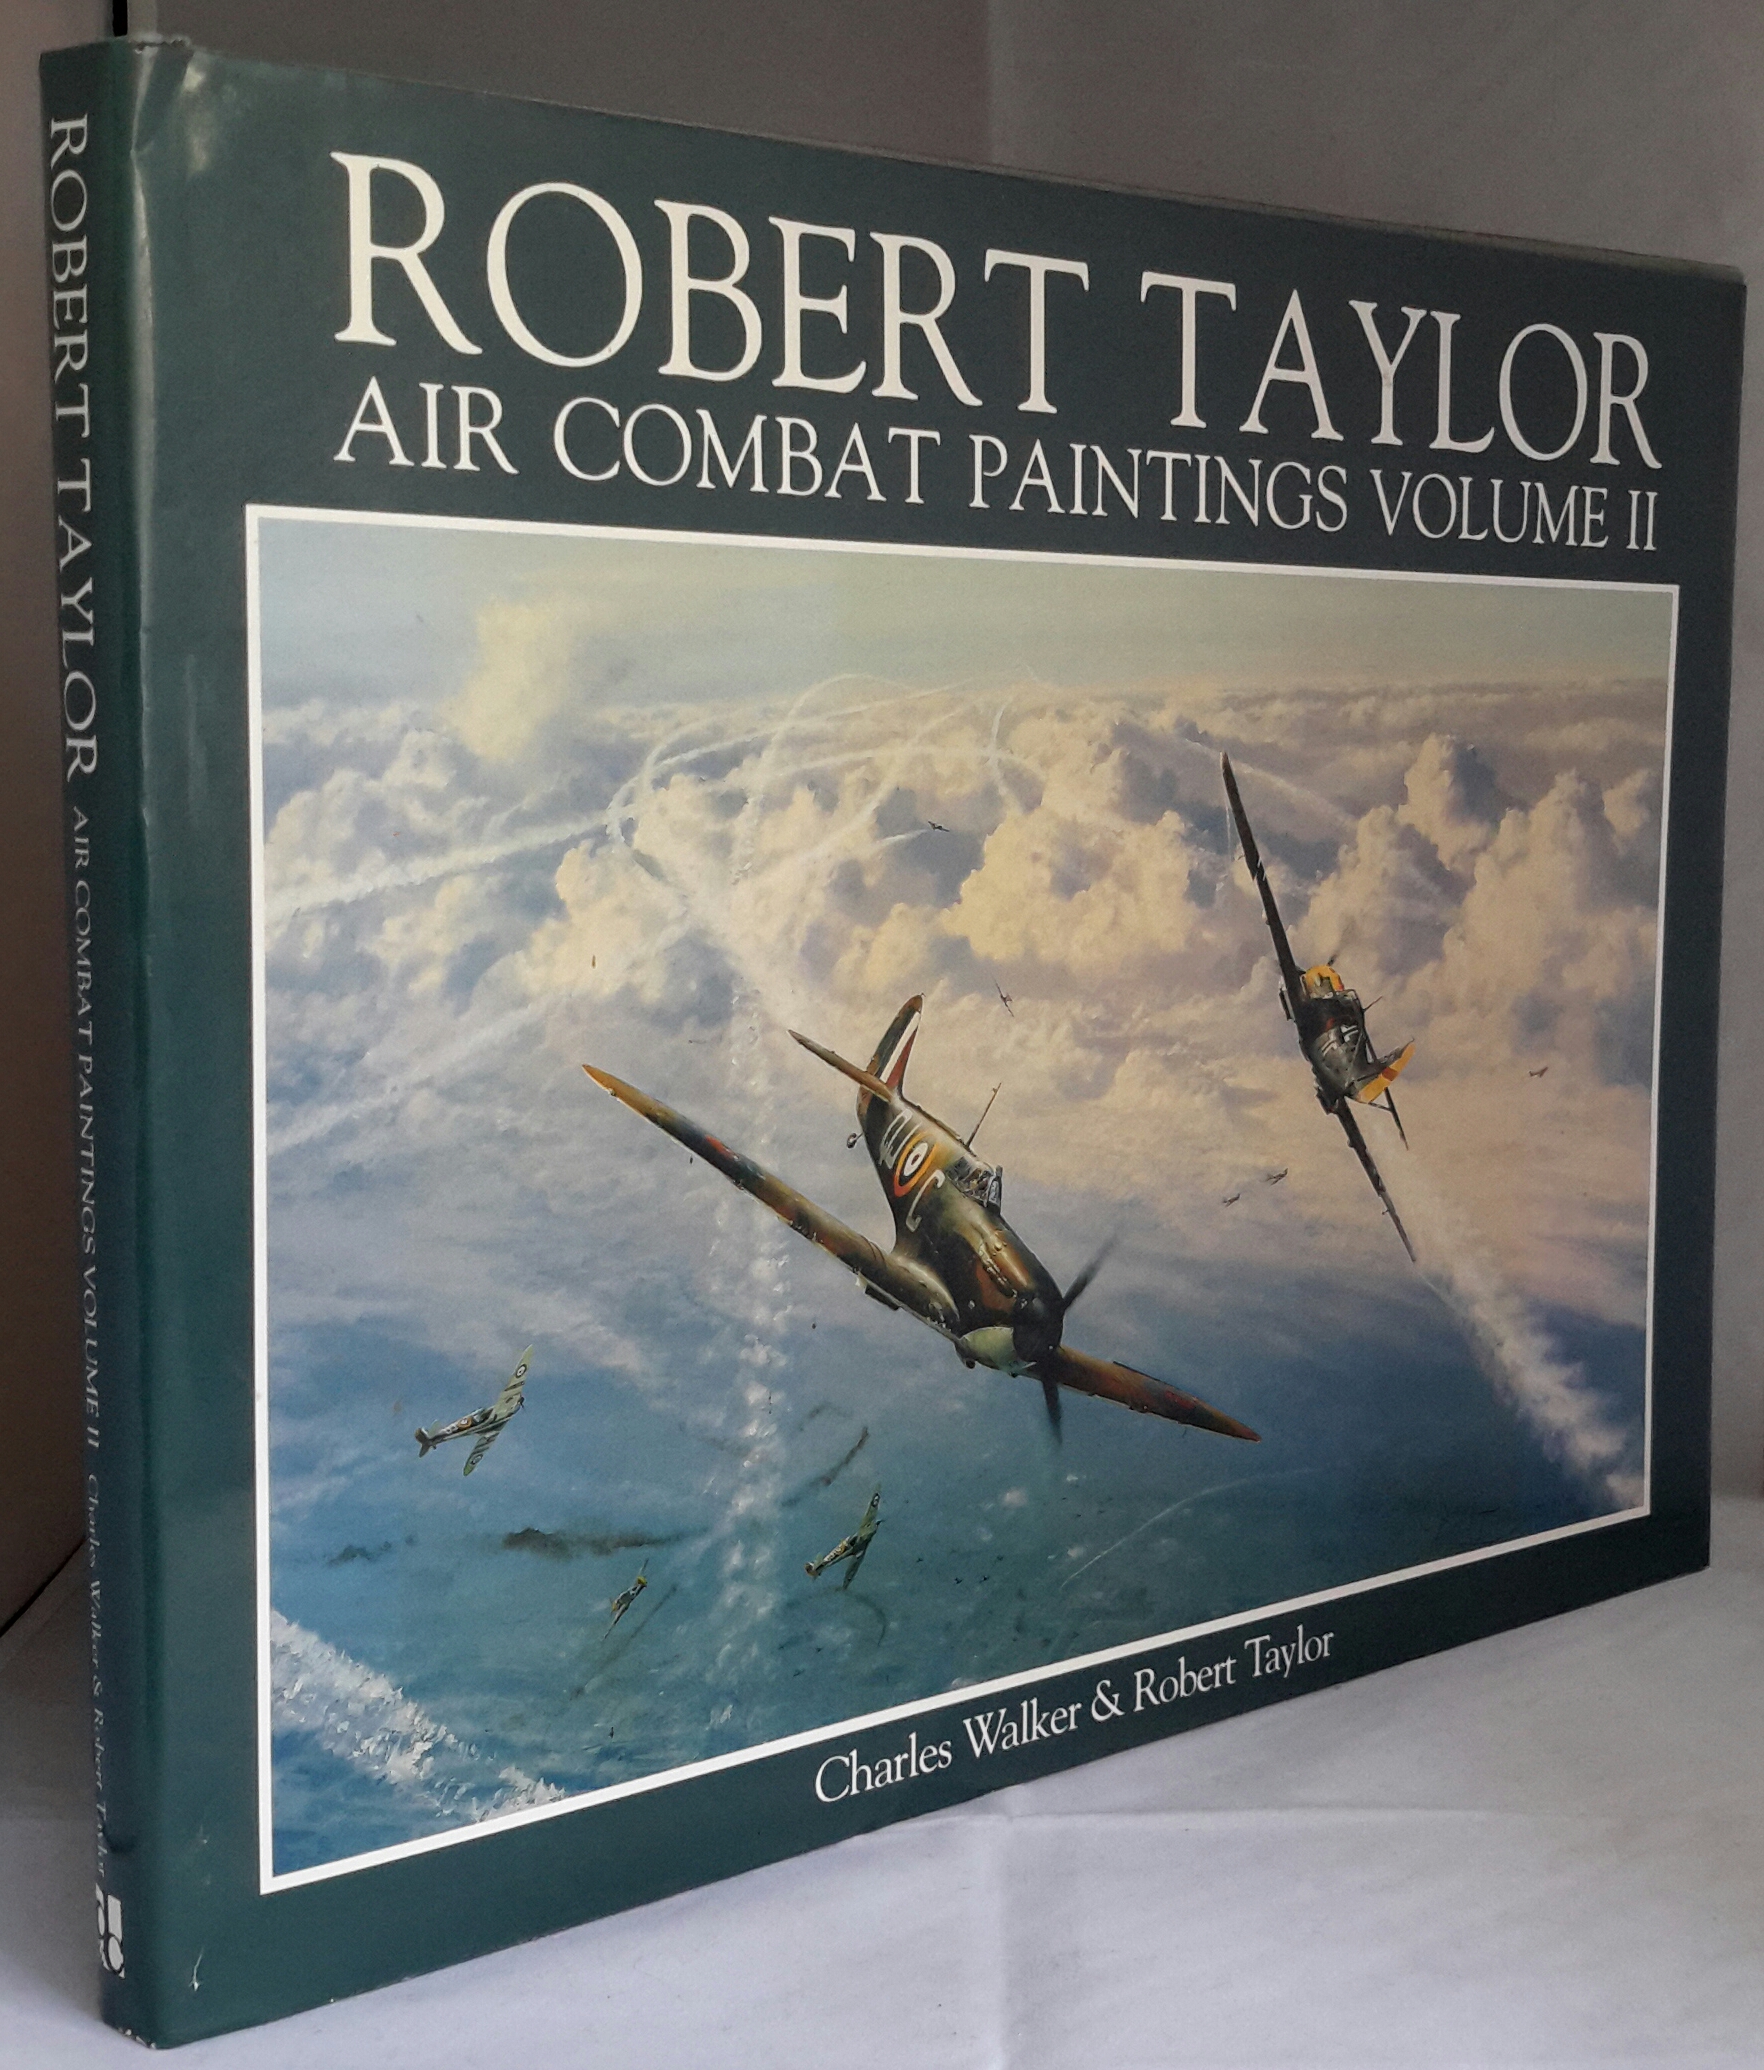 Robert Taylor Air Combat Paintings. Volume II. - TAYLOR, Robert. and Charles WALKER.